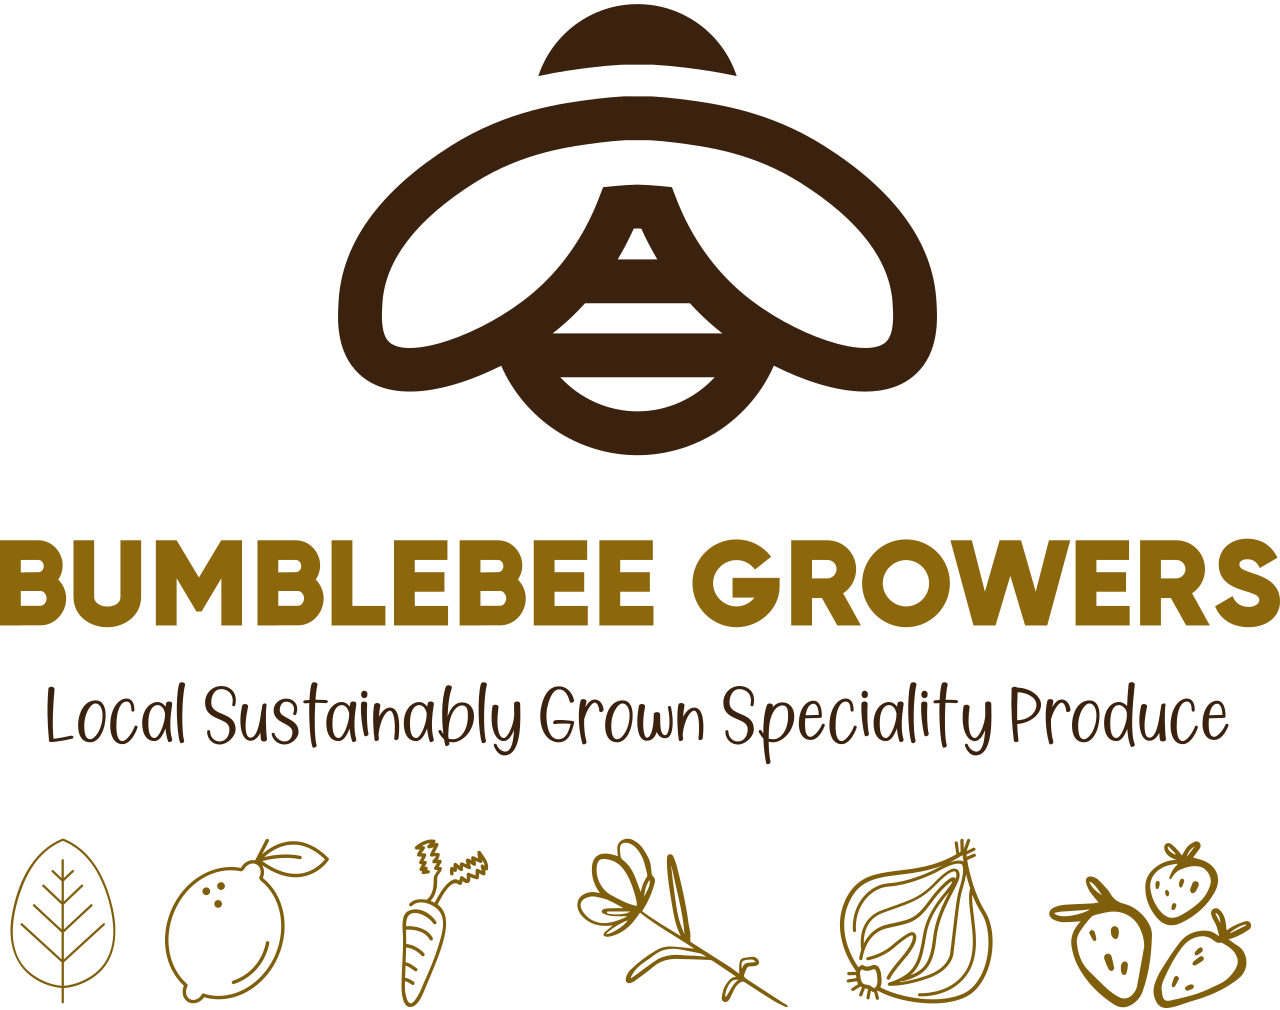 bumblebee growers's web page